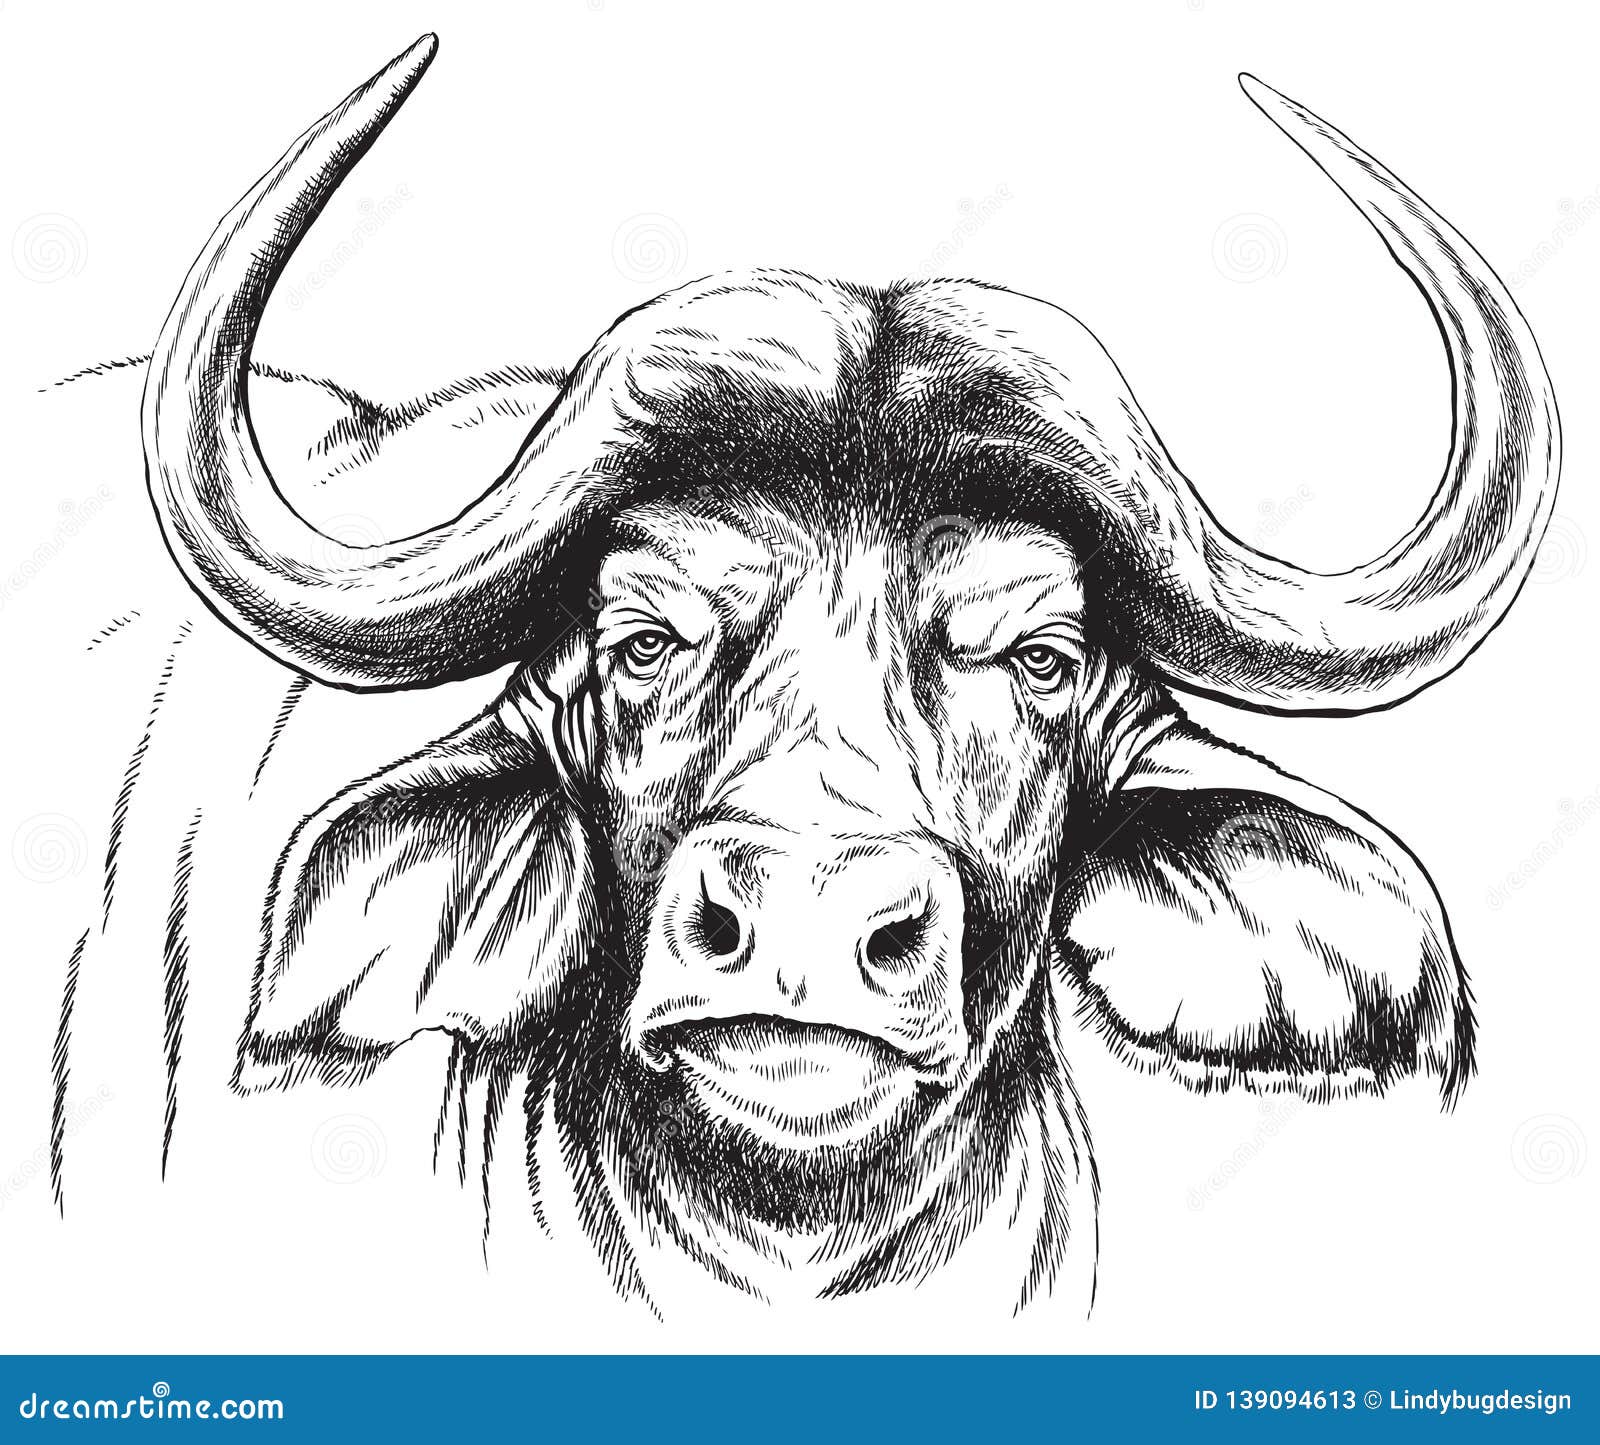 Black White Buffalo Sketch Stock Illustration Illustration of herbivore, farm: 139094613